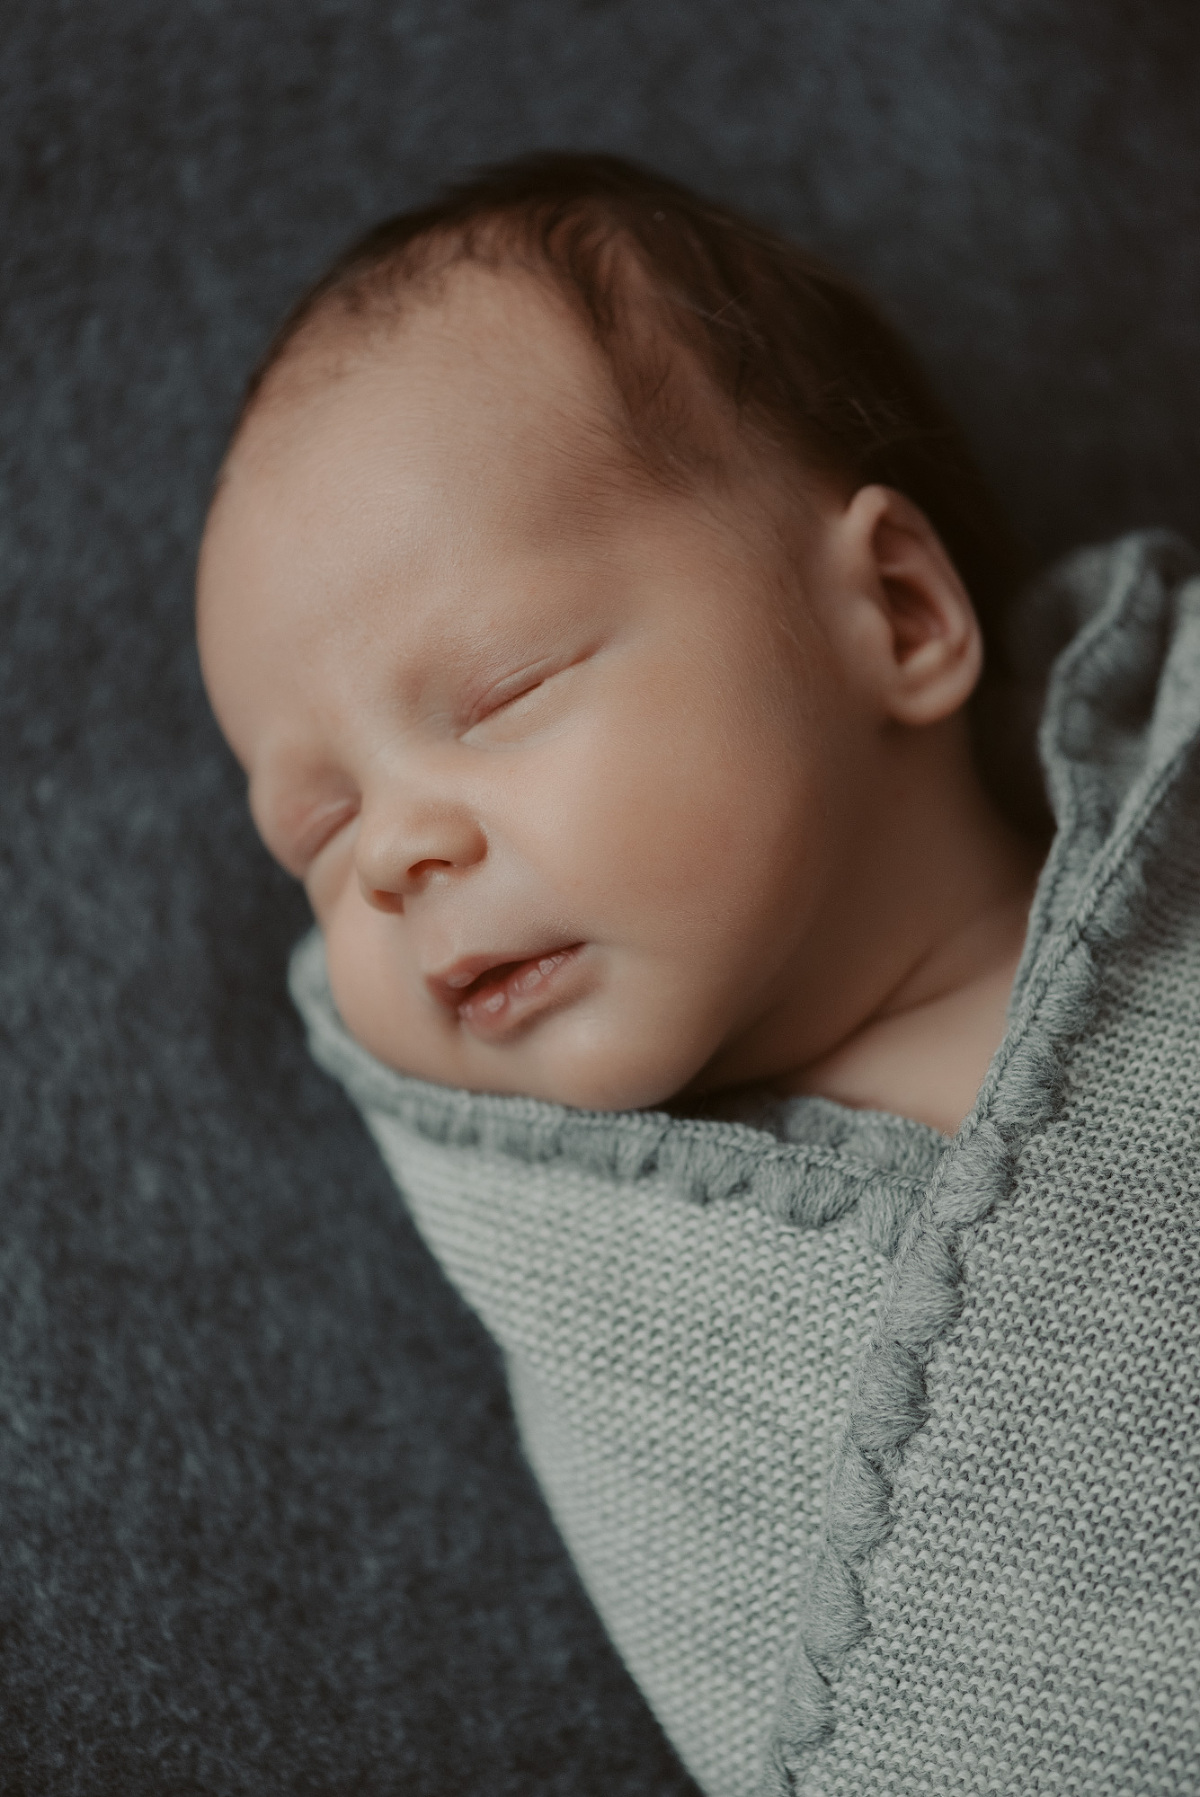 kinderfotograf nidderau babfotografin frankfurt babybilder kinderbilder fotografieren hessen neugeborenenbilder familienbilder